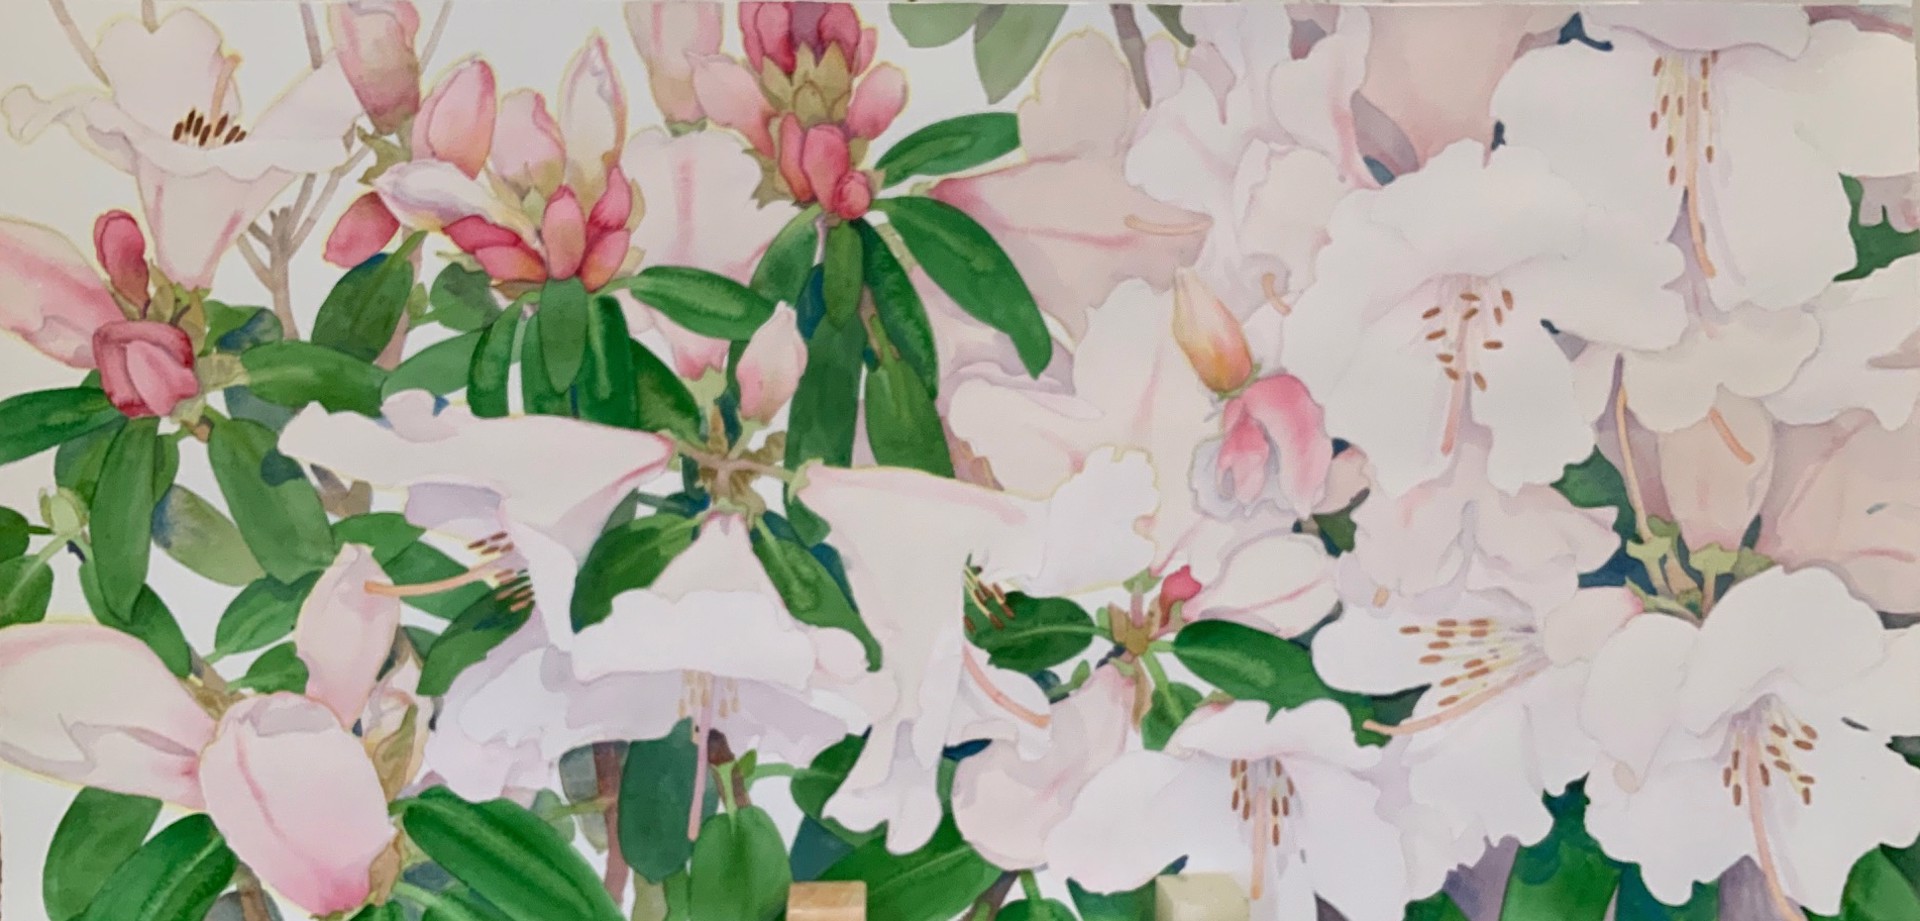 Rhododendrons by Gary Bukovnik